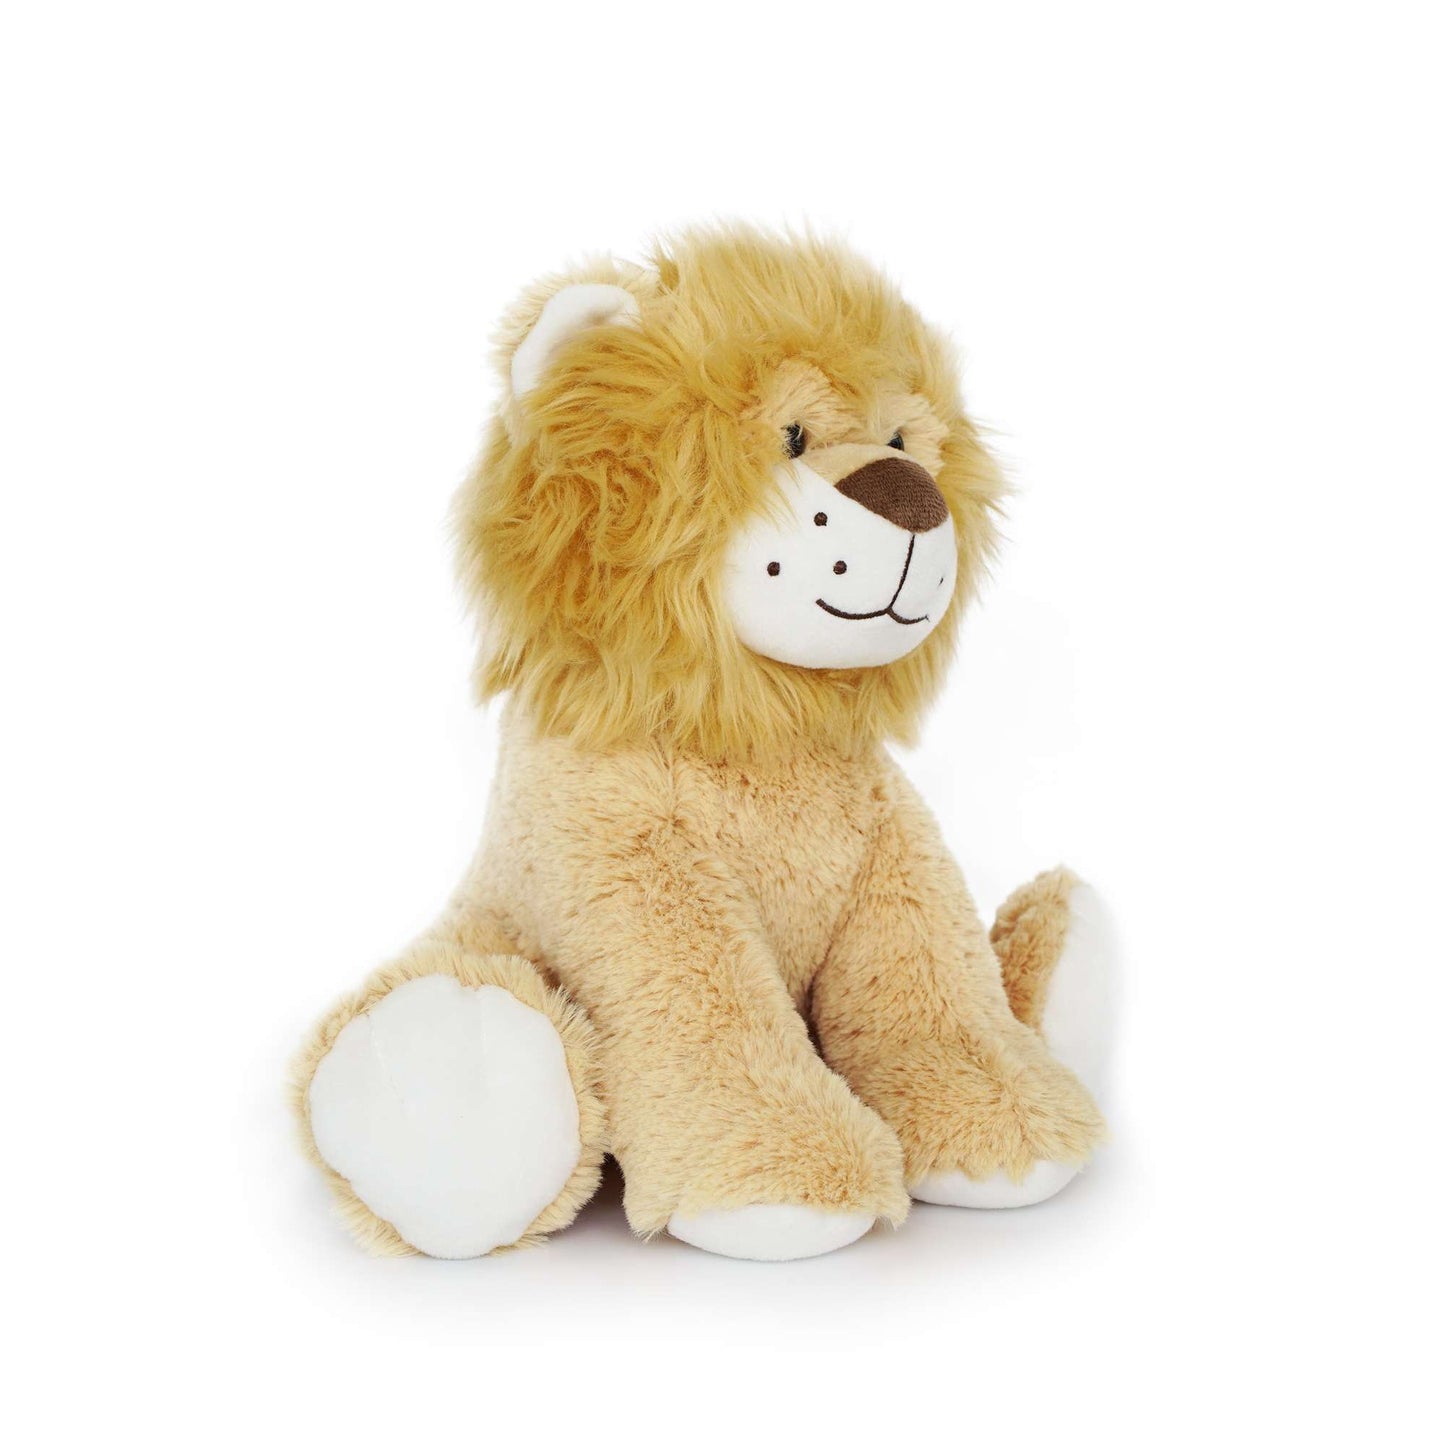 Lion stuffed animal realistic PlushThis